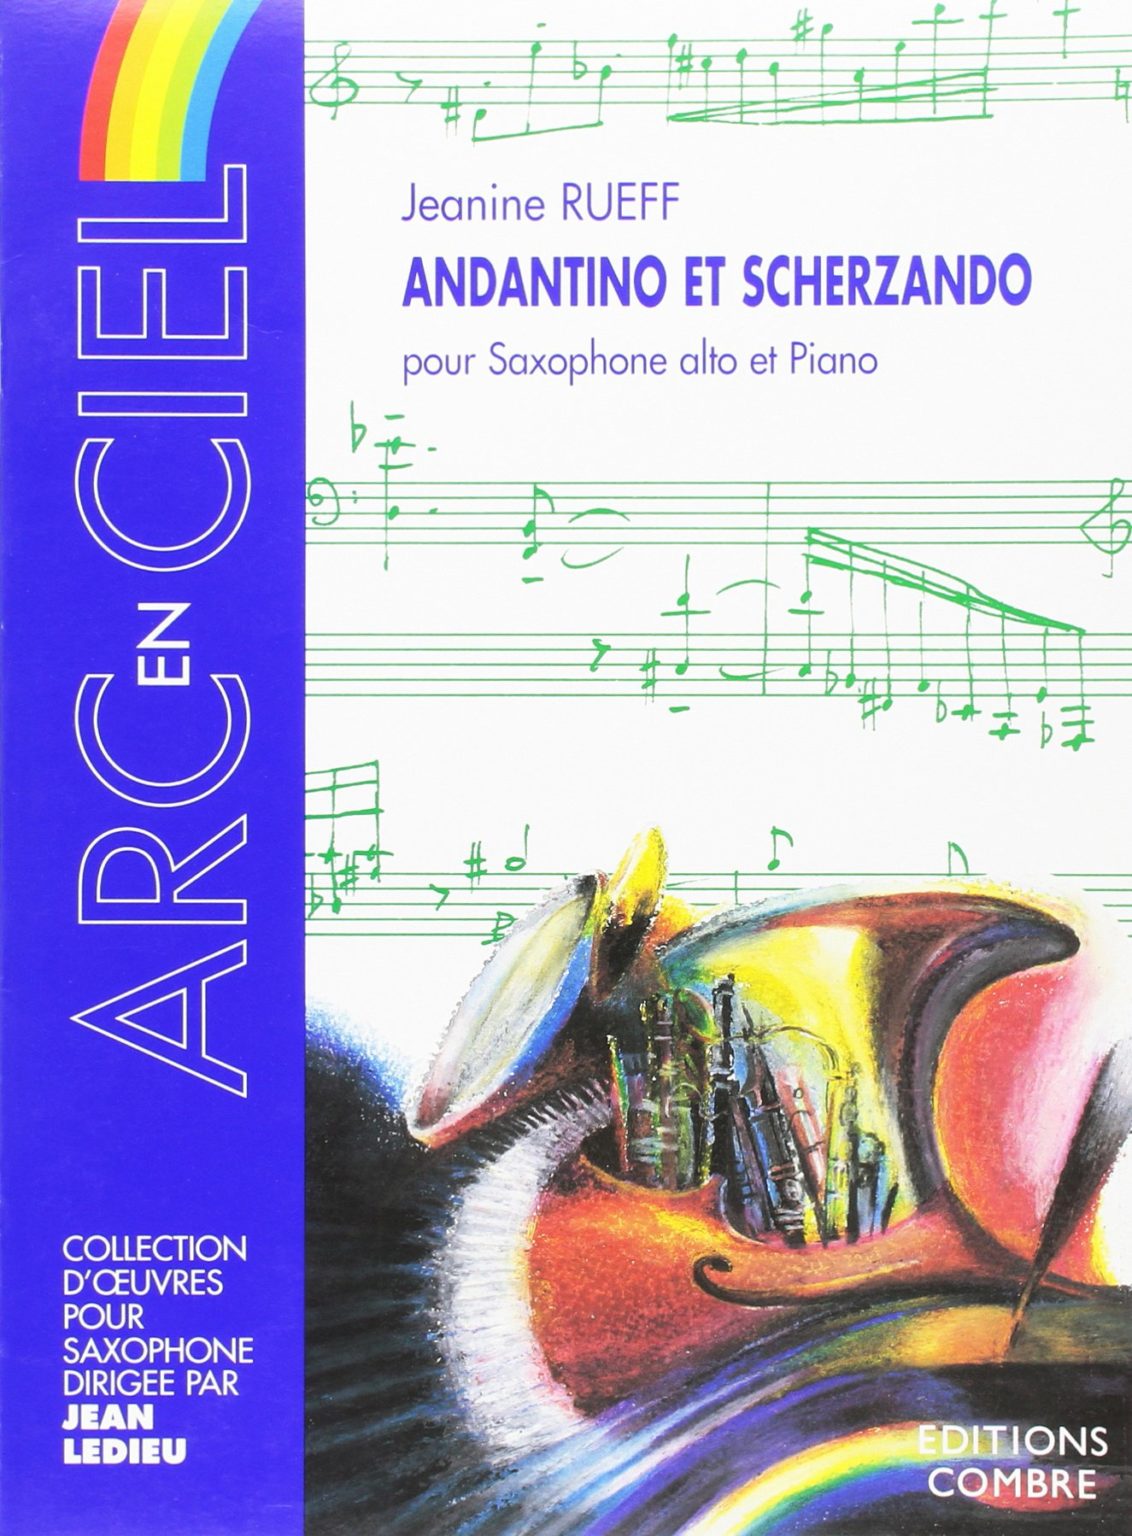 Andantino et Scherzando. Jeanine Rueff